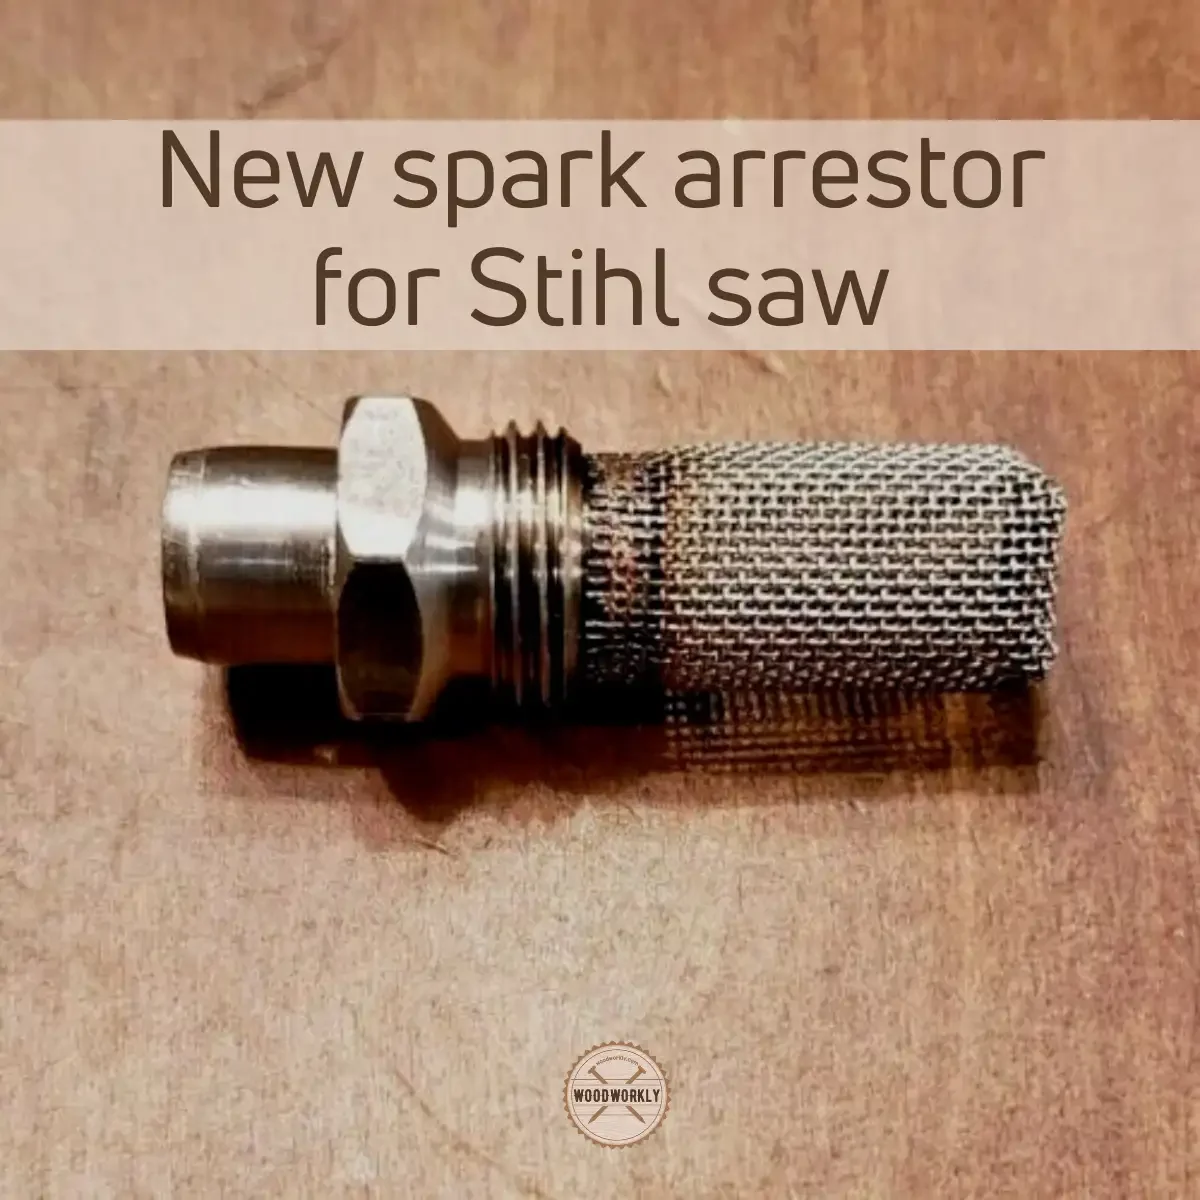 New spark arrestor for Stihl saw